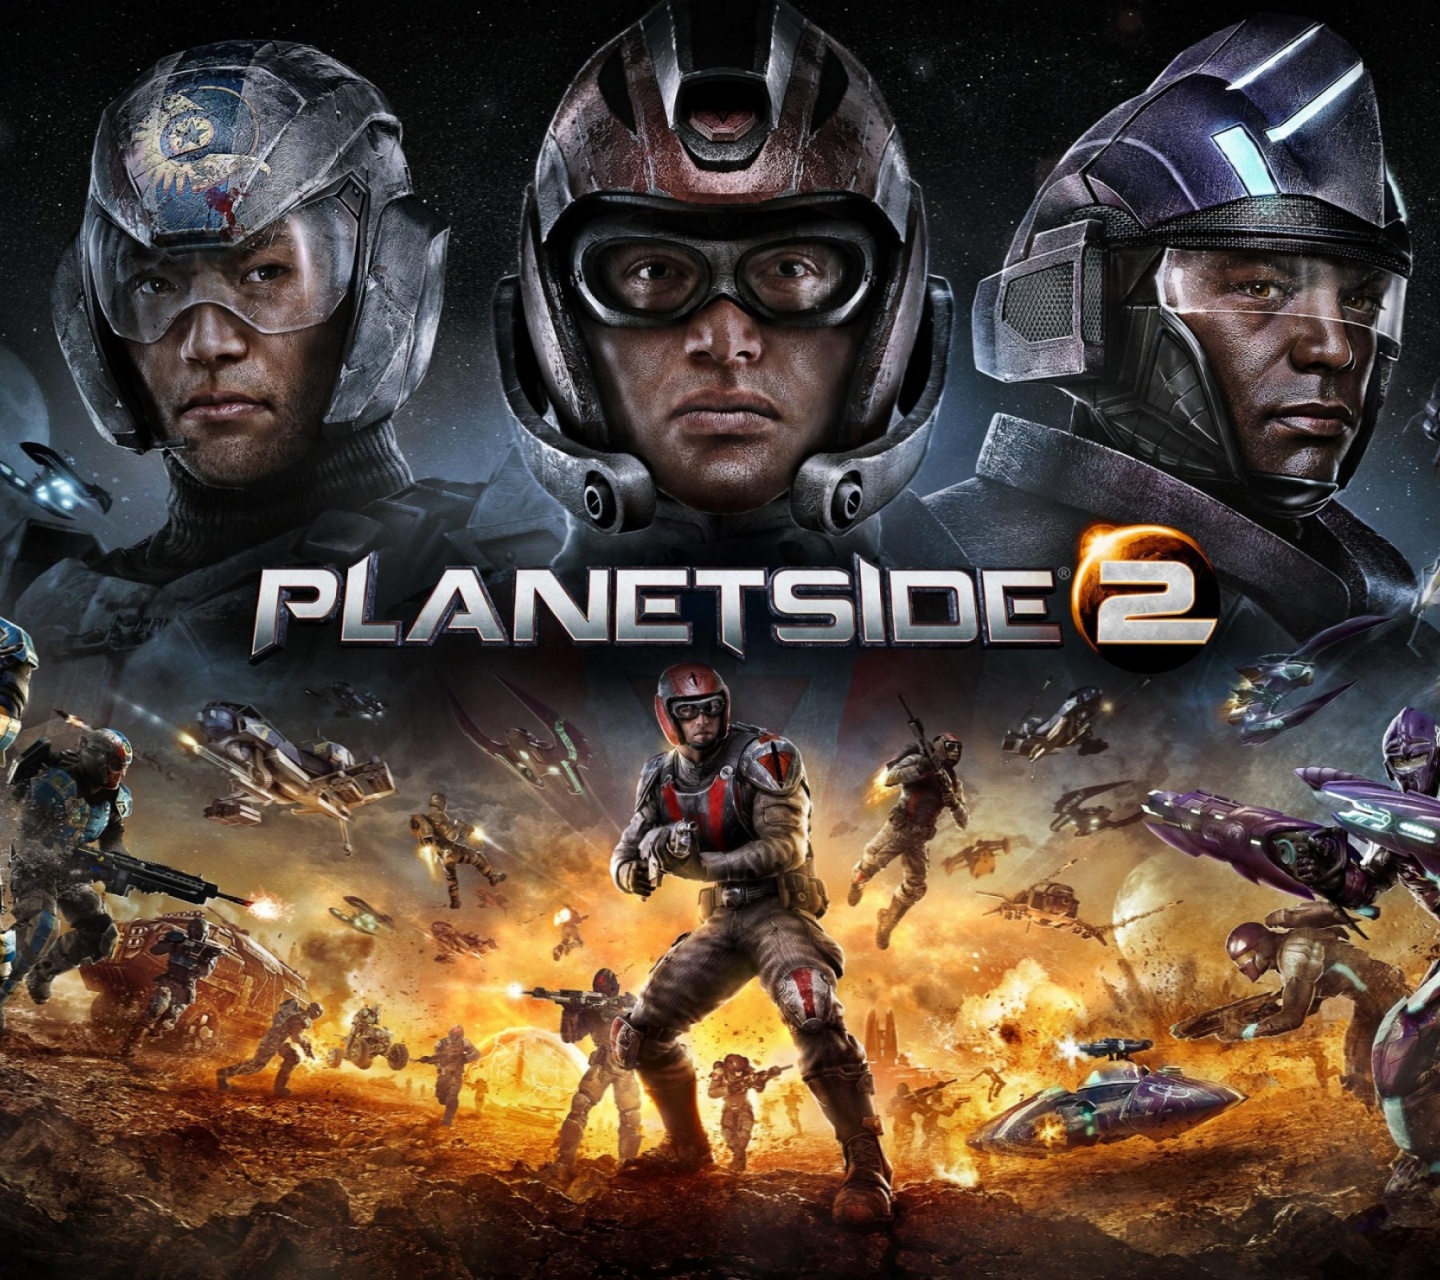 PlanetSide 2 Game